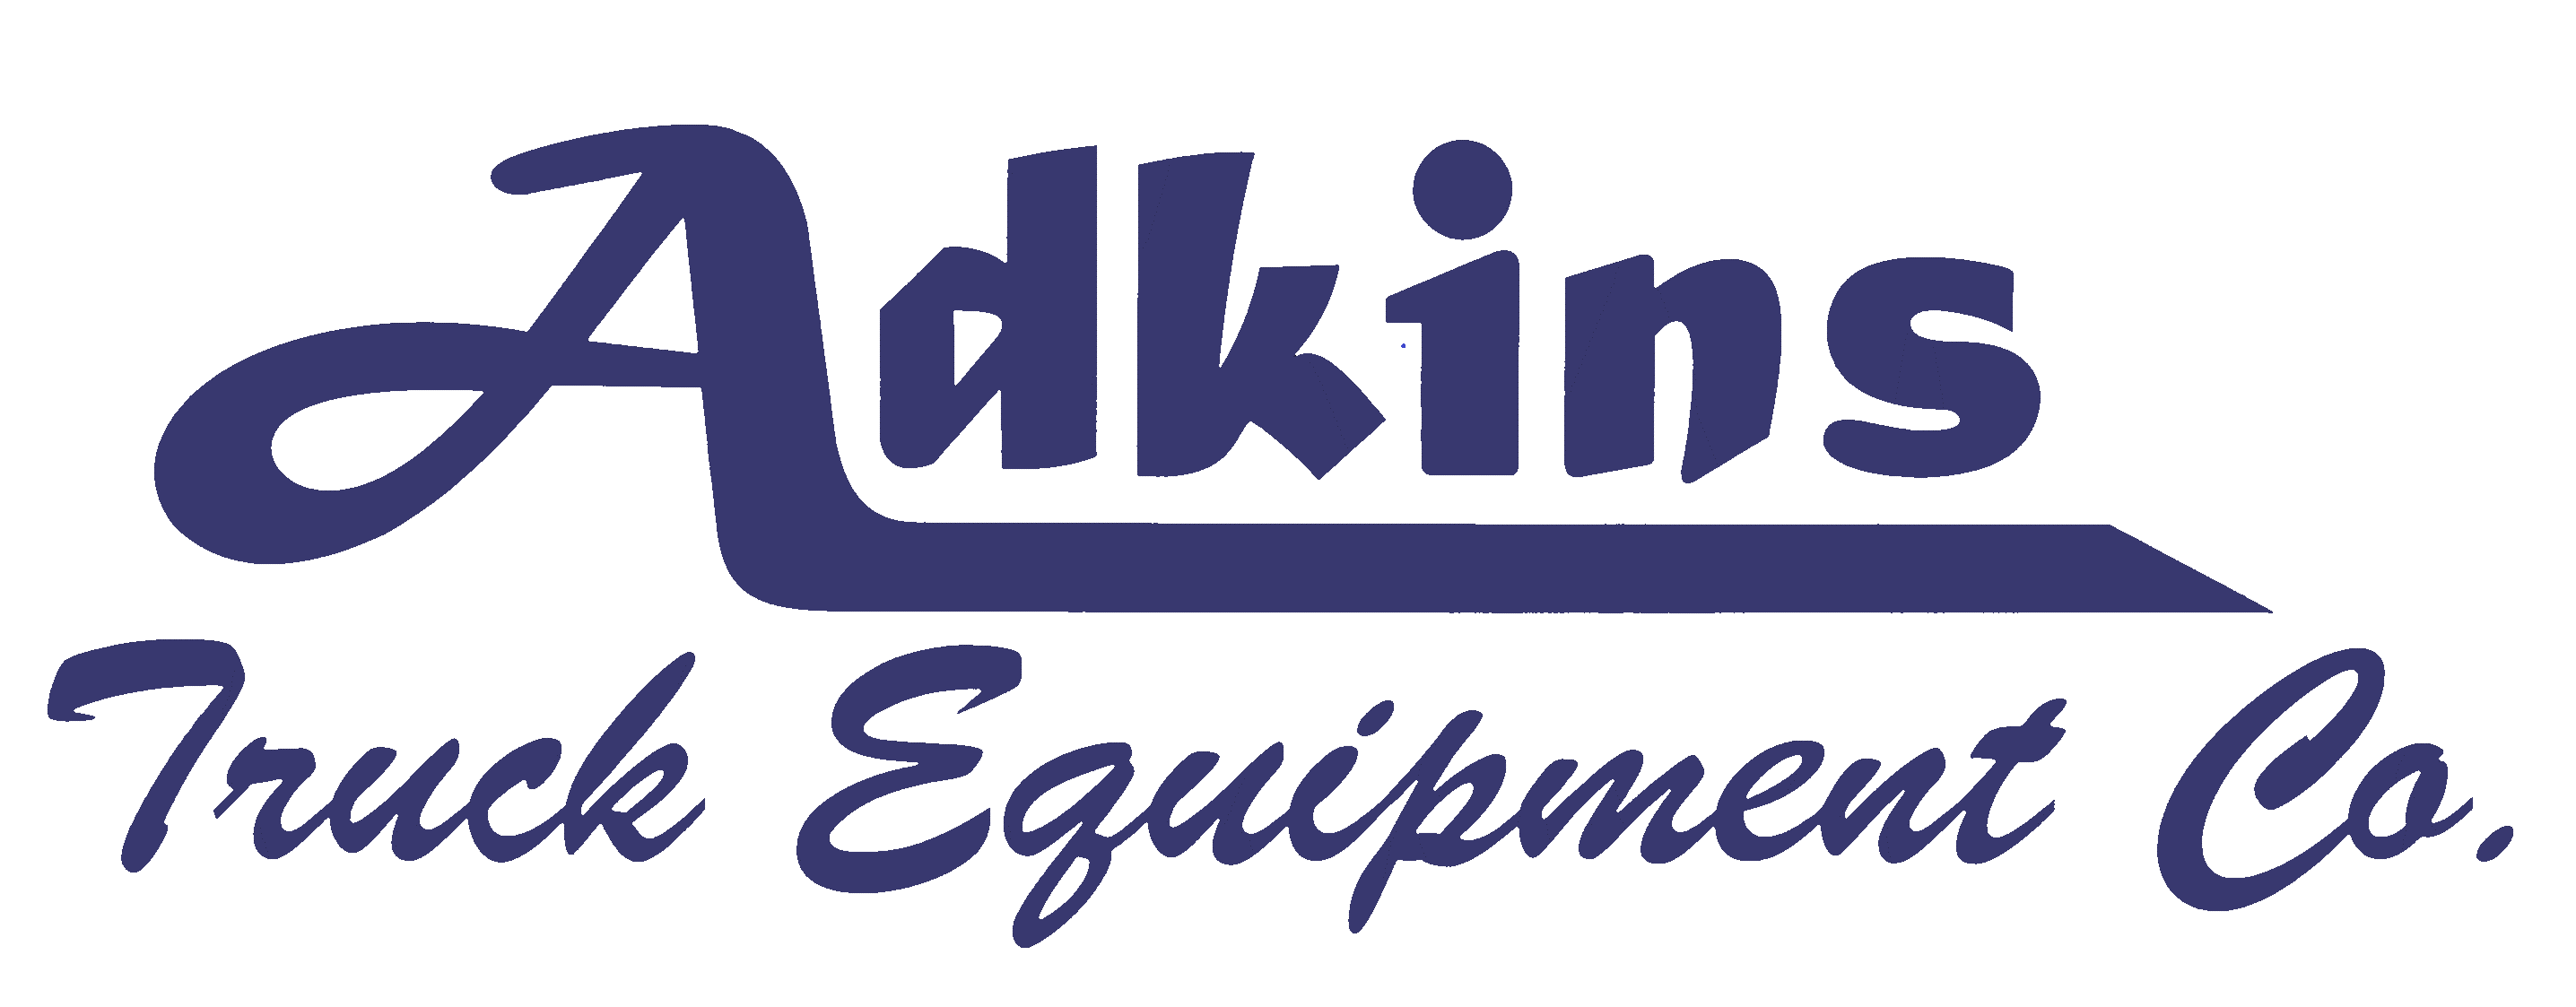 Adkins Truck Equipment Co. logo